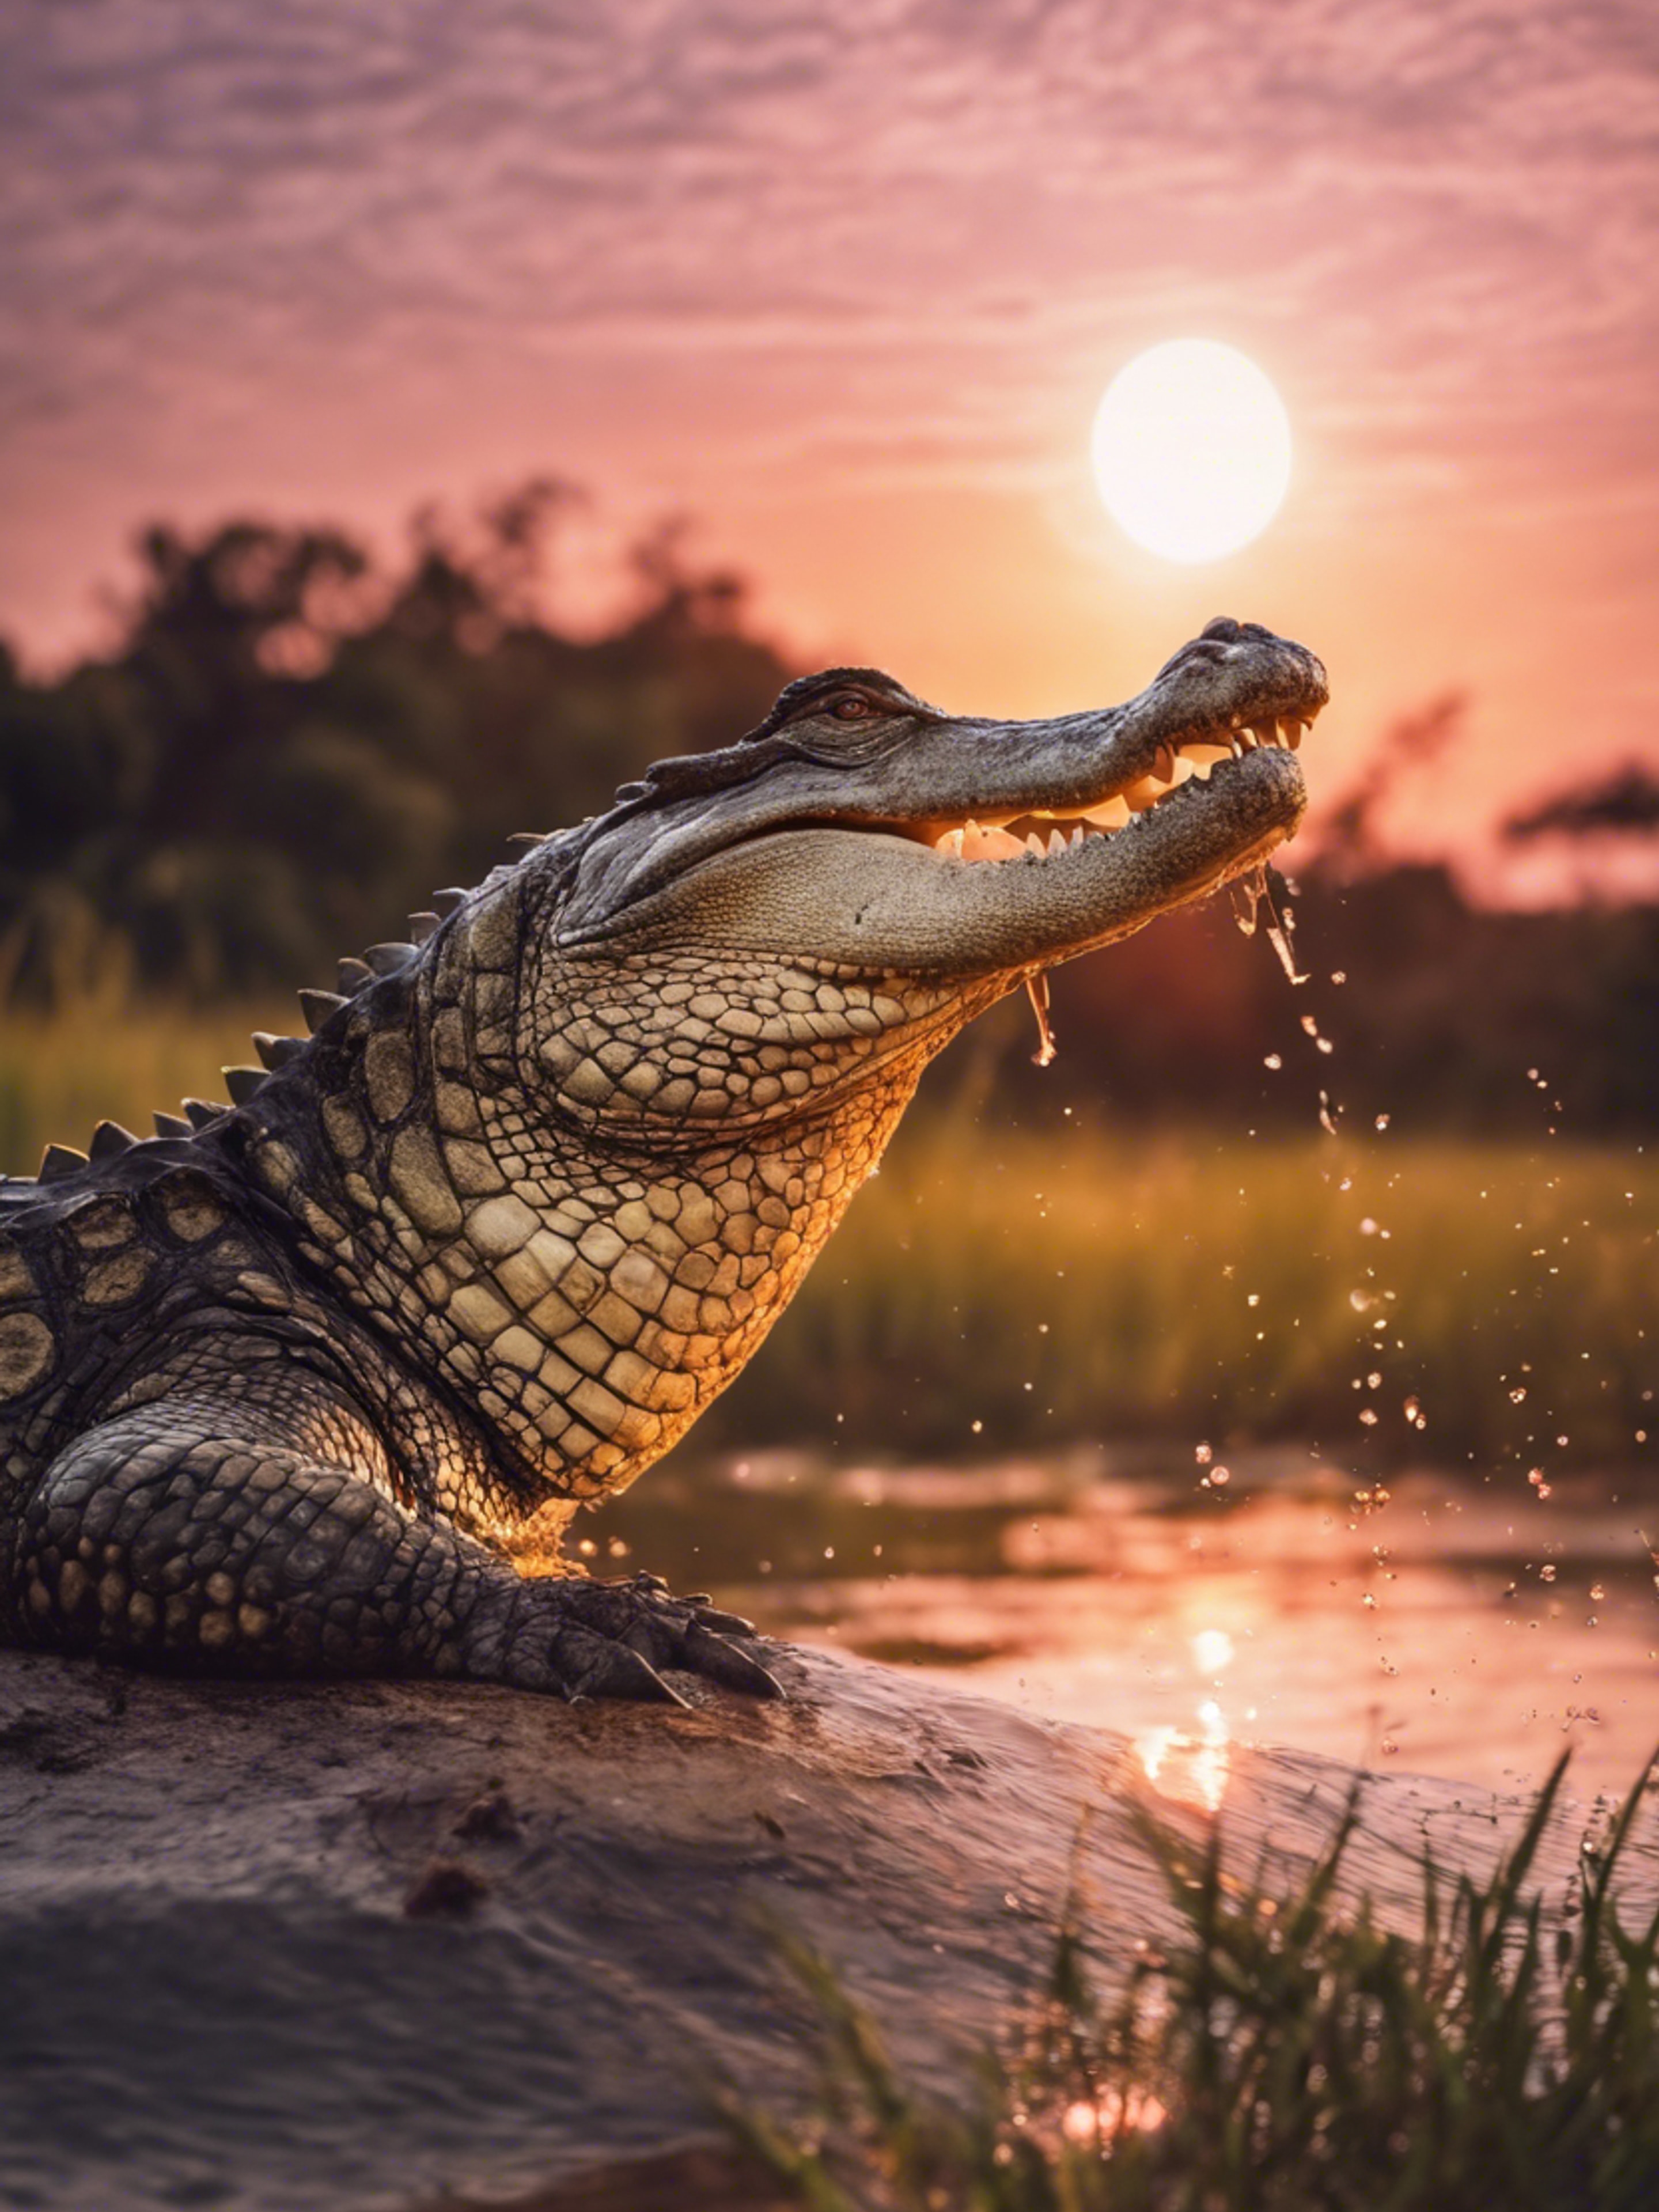 A beautiful sunrise with a crocodile breaking the surface under a rosy sky.壁紙[8e947b6adb0246b9980f]